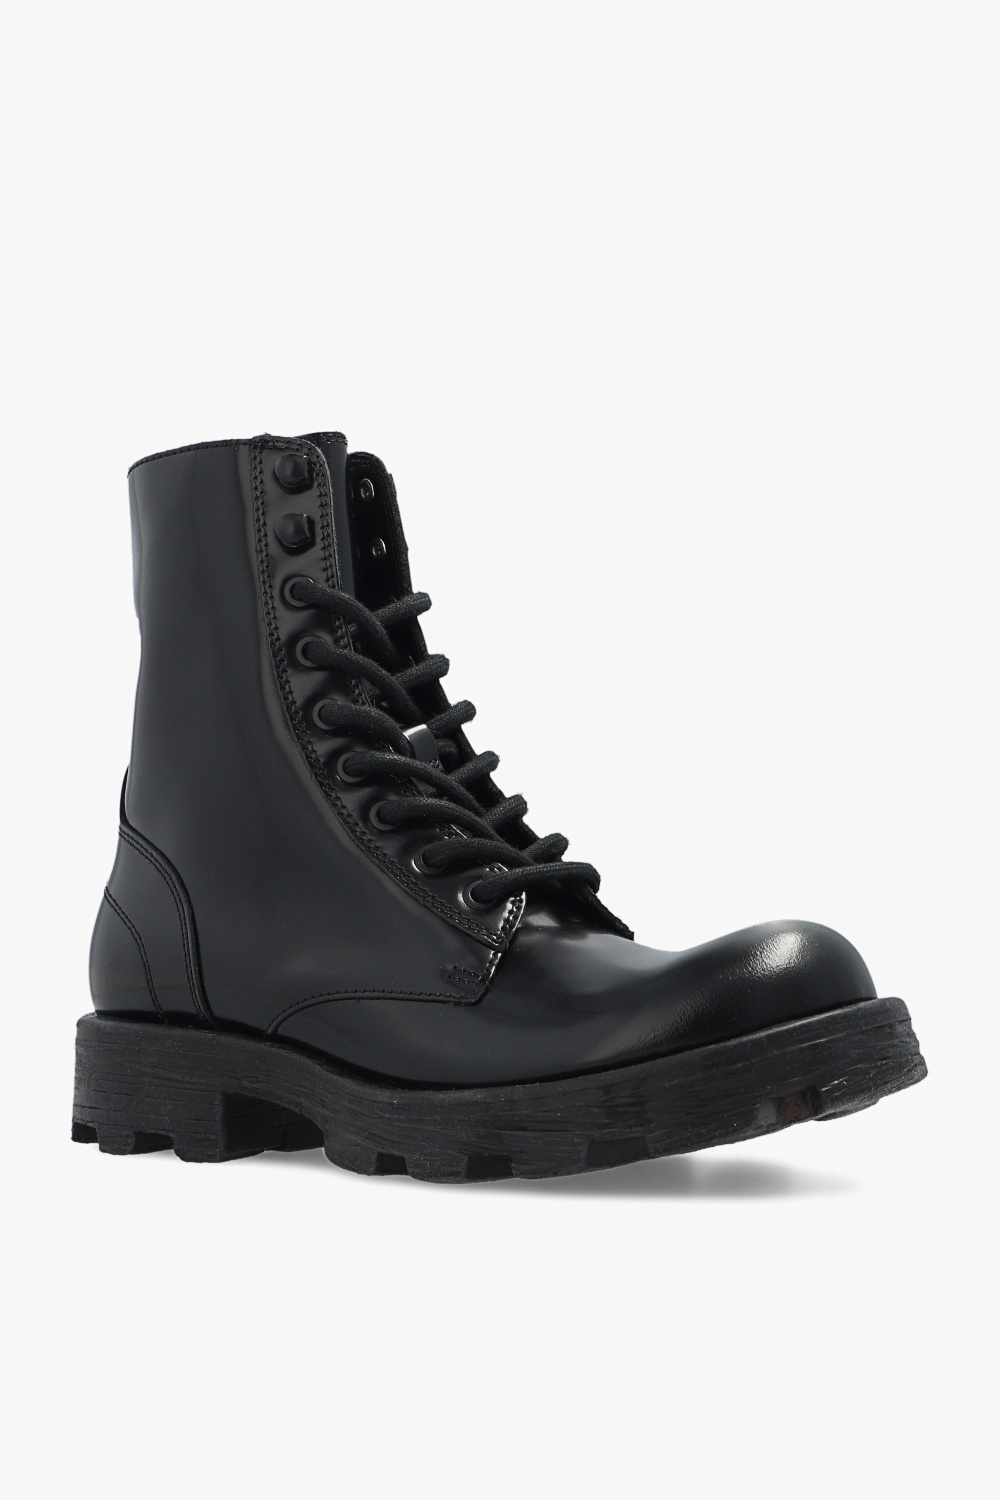 Black ‘D-HAMMER’ boots Diesel - Vitkac GB